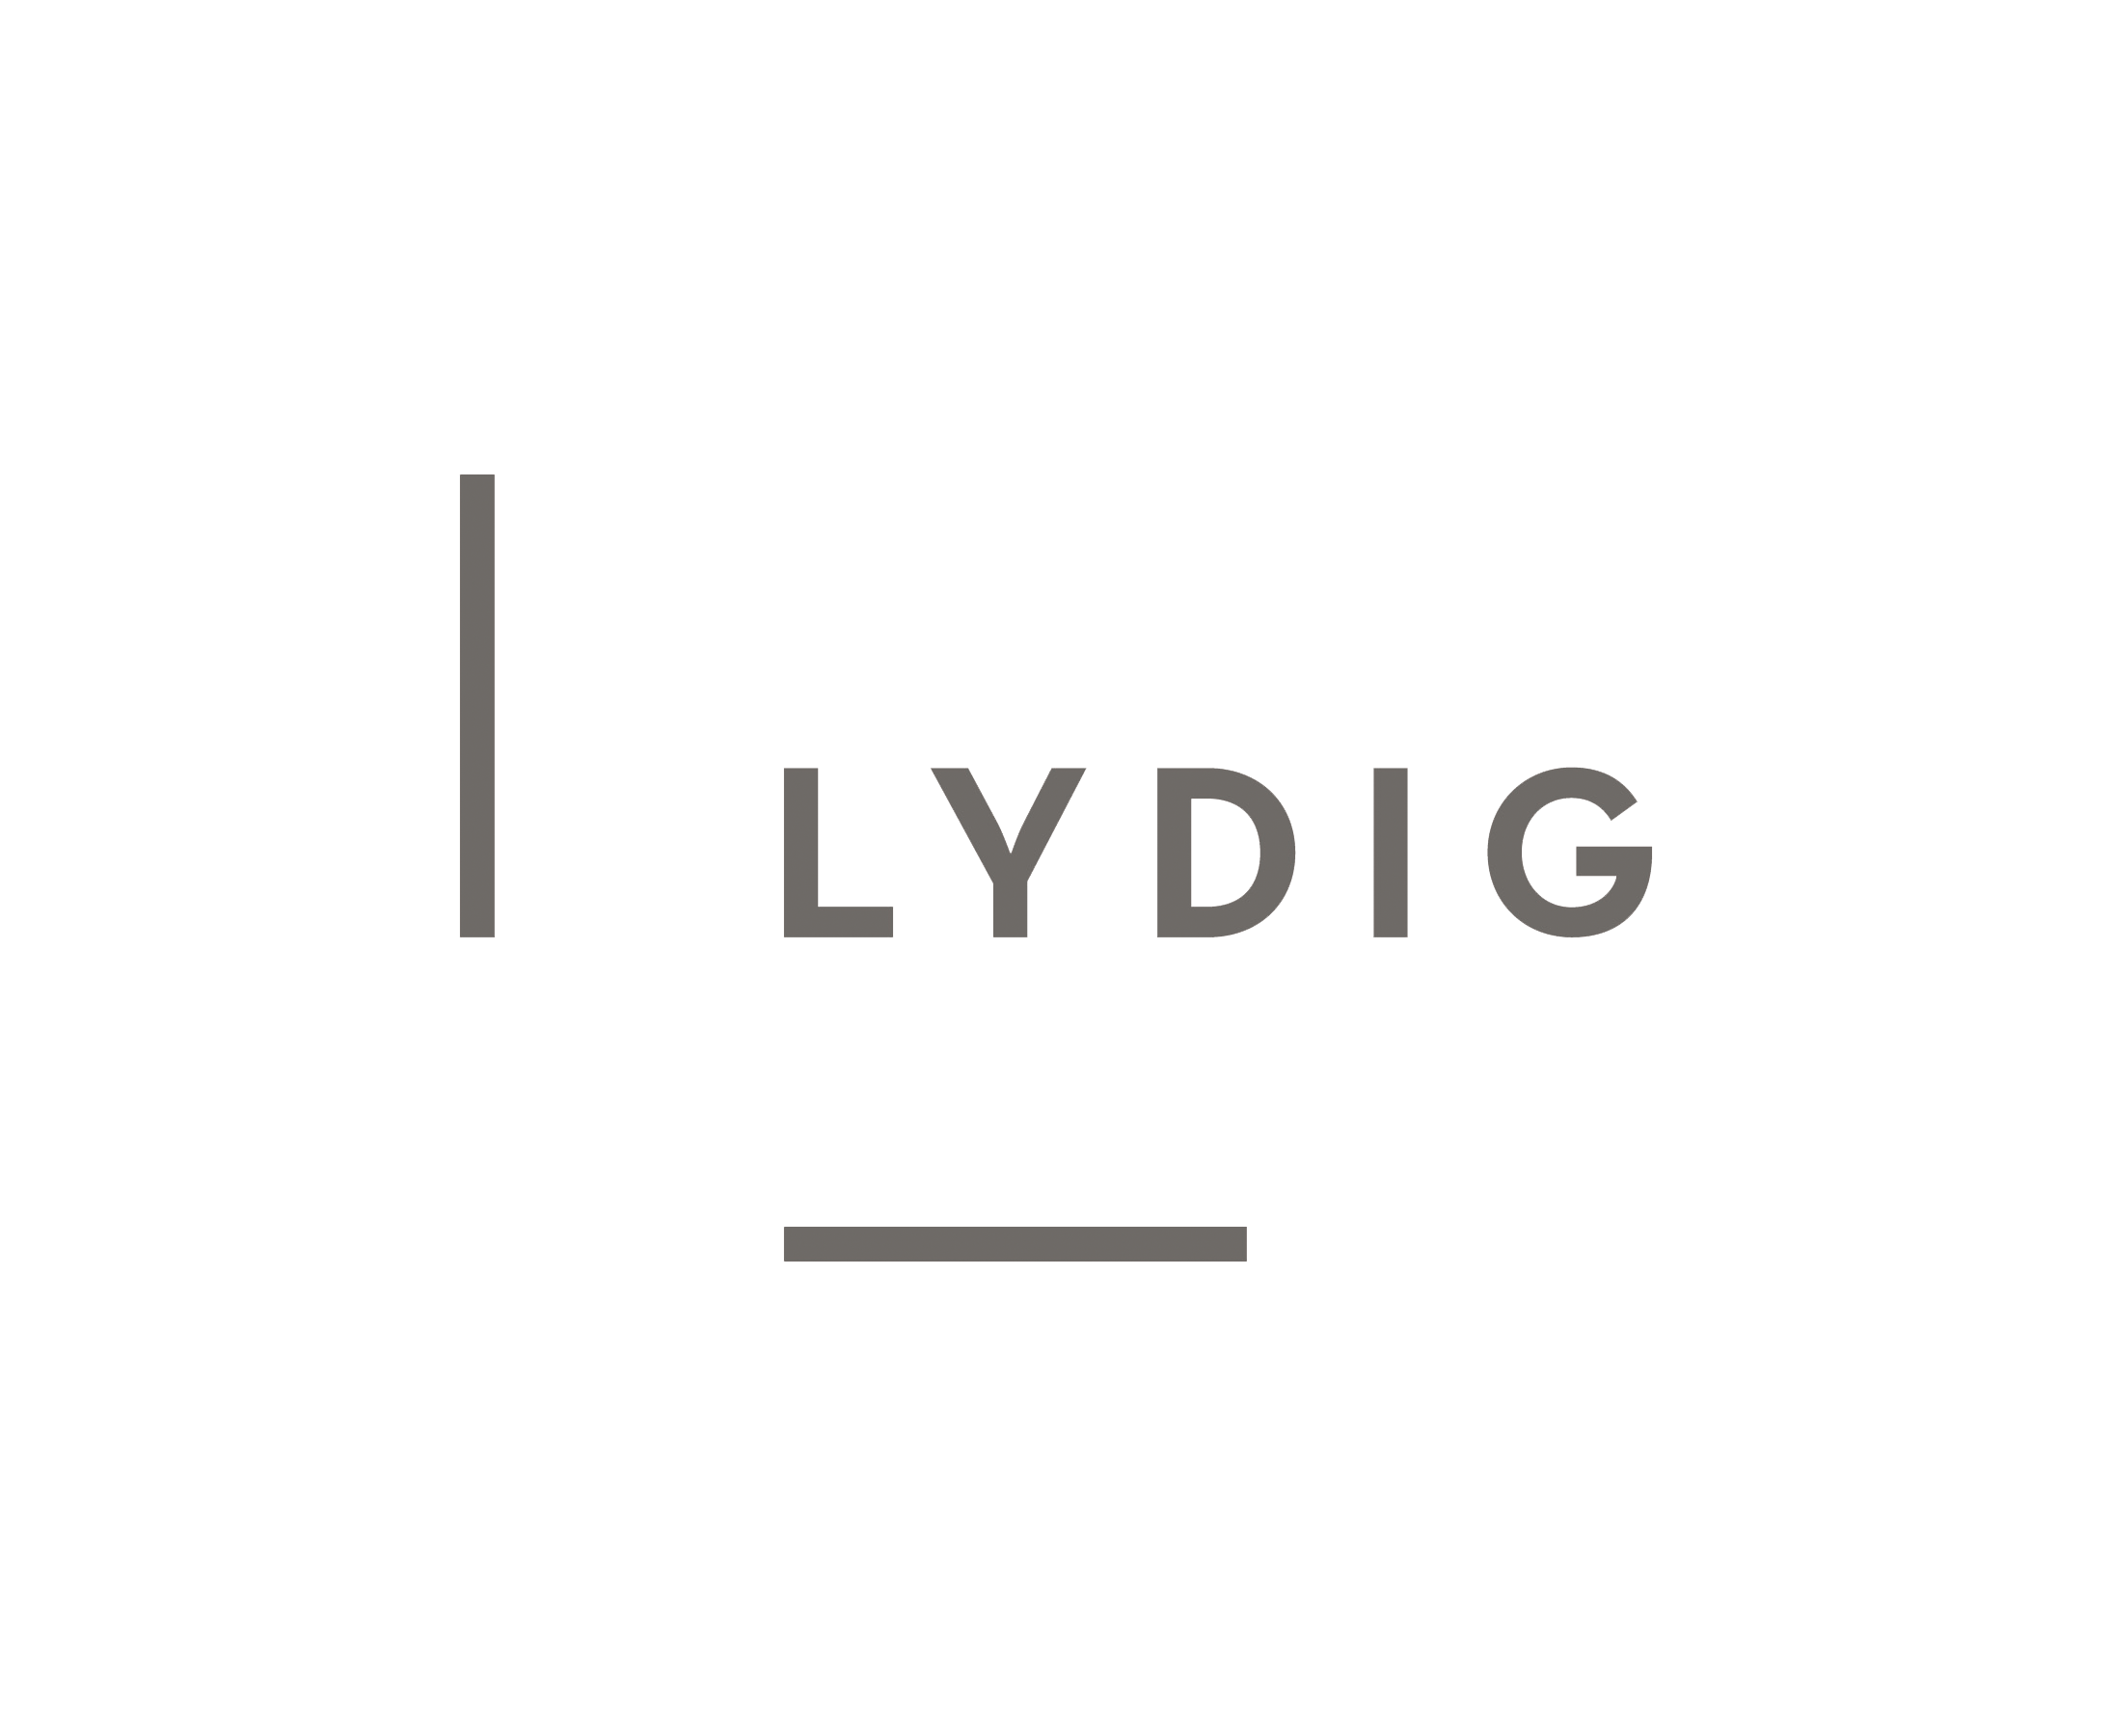 Lydig_Logo_Charcoal.png